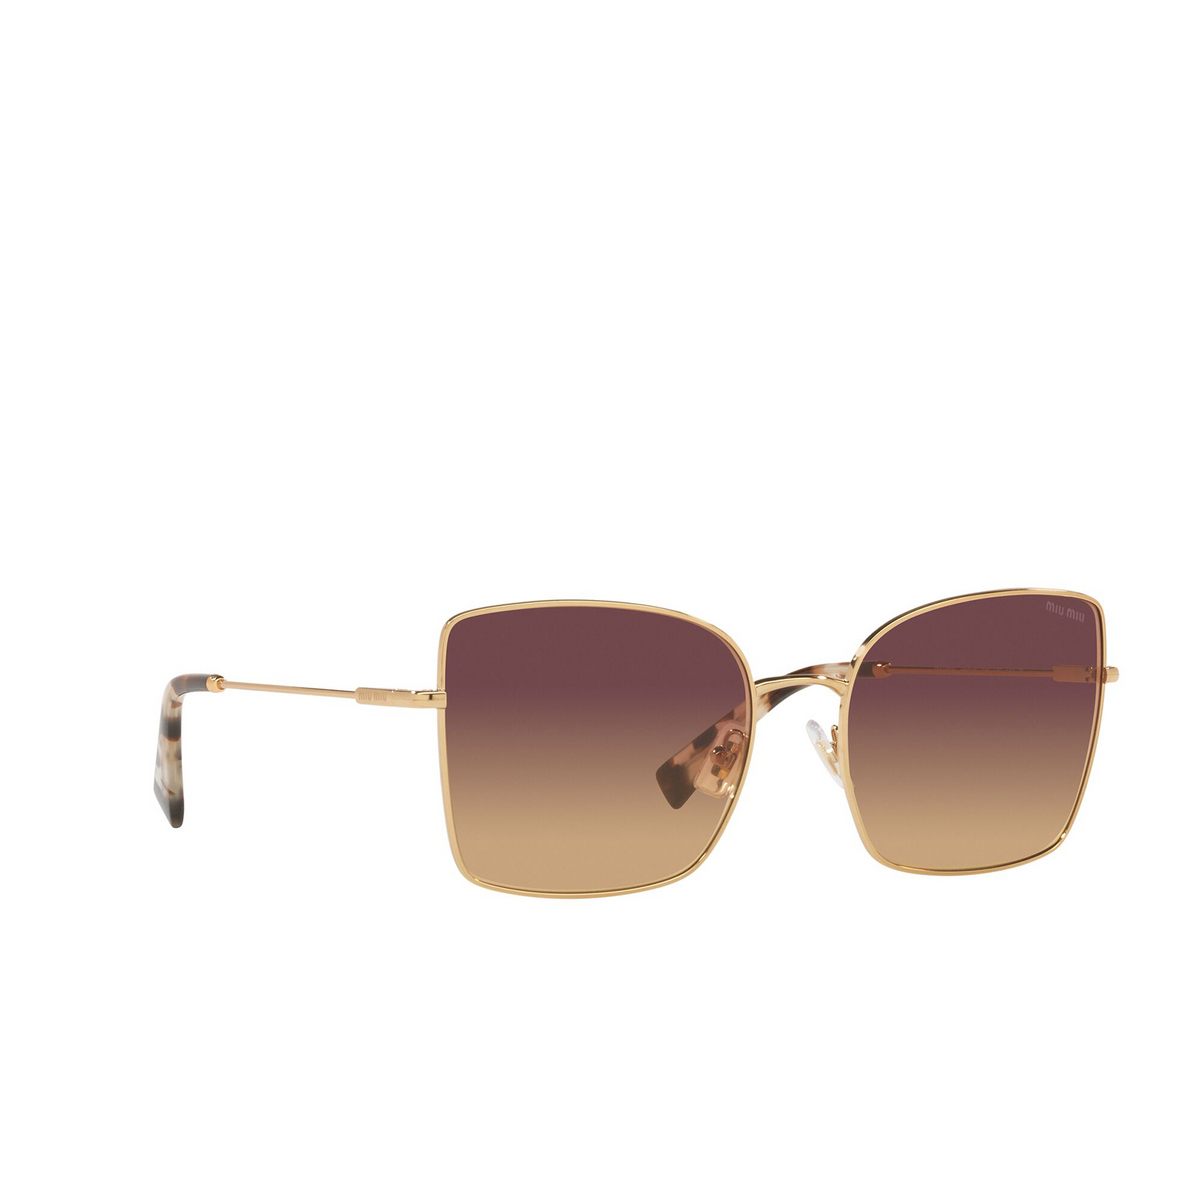 Miu Miu® Butterfly Sunglasses: MU 51WS color Antique Gold 7OE07P - three-quarters view.